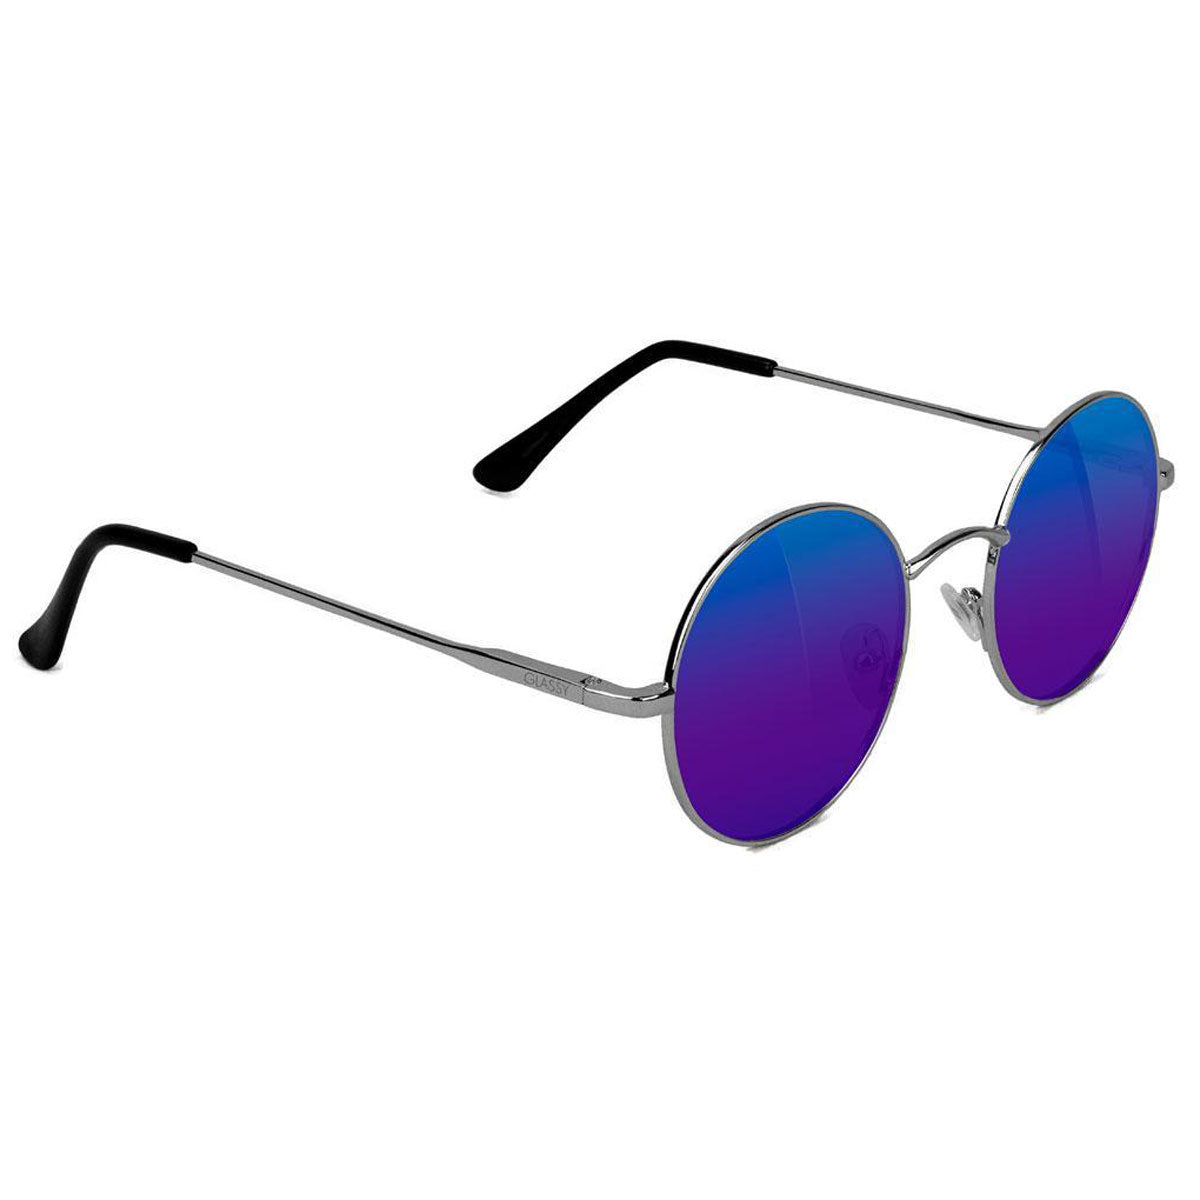 Glassy Jaws Premium Polarized Sunglasses - Silver/Blue Mirror image 1